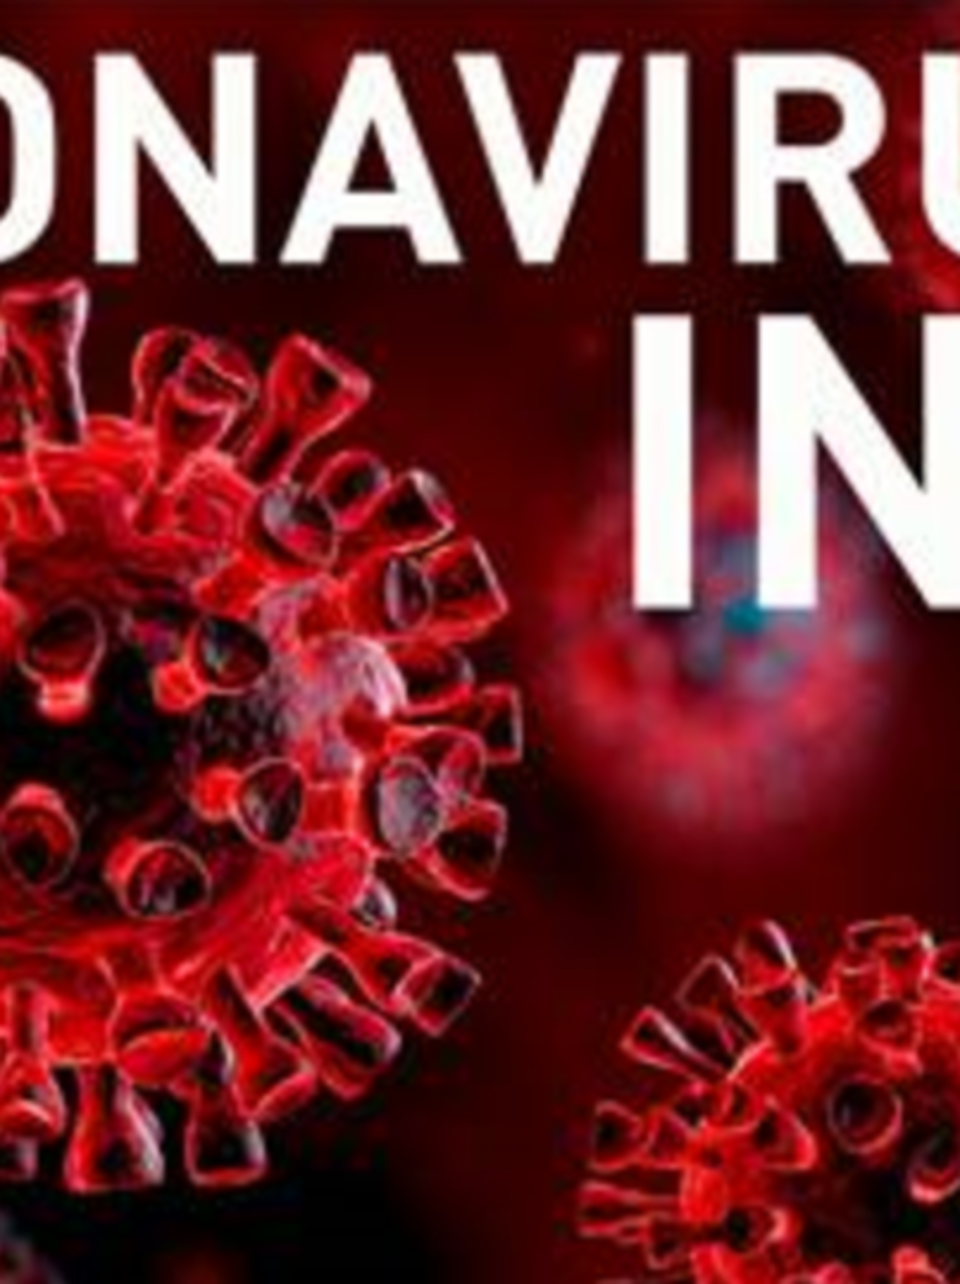 Closures And Cancellations In Response To Coronavirus Wjac